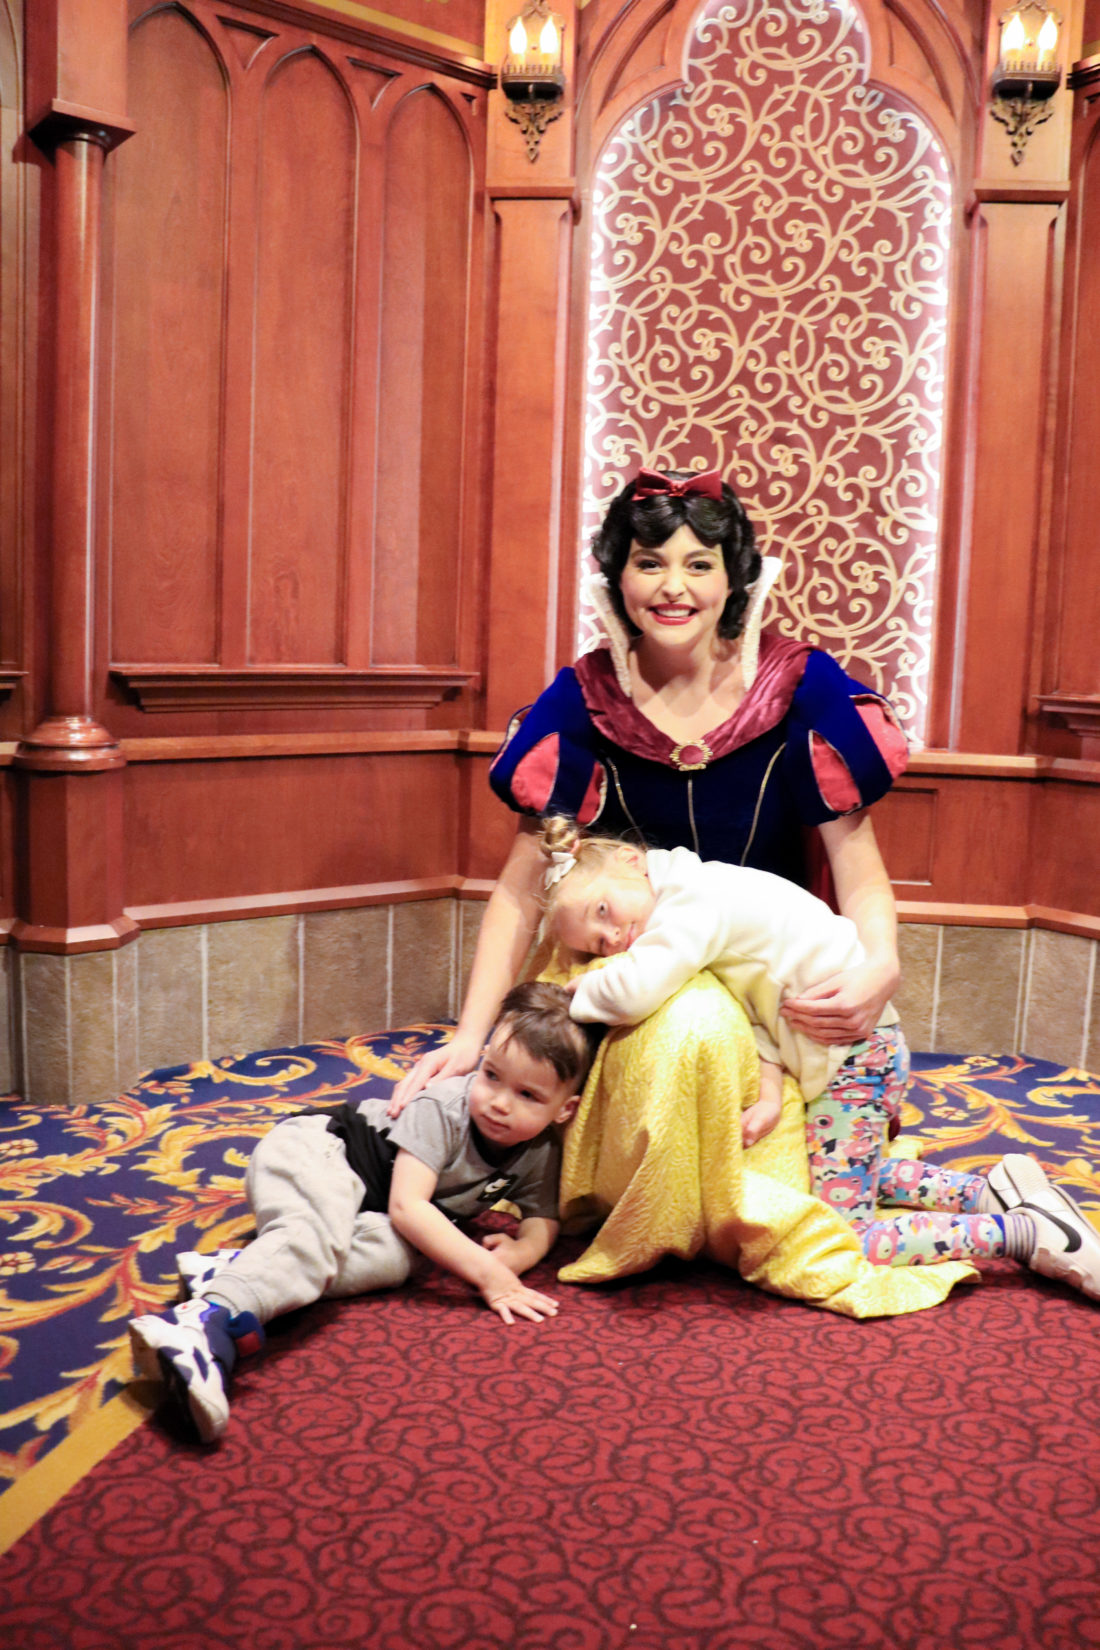 Eva Amurri Martino shares images from her family trip to Disneyland